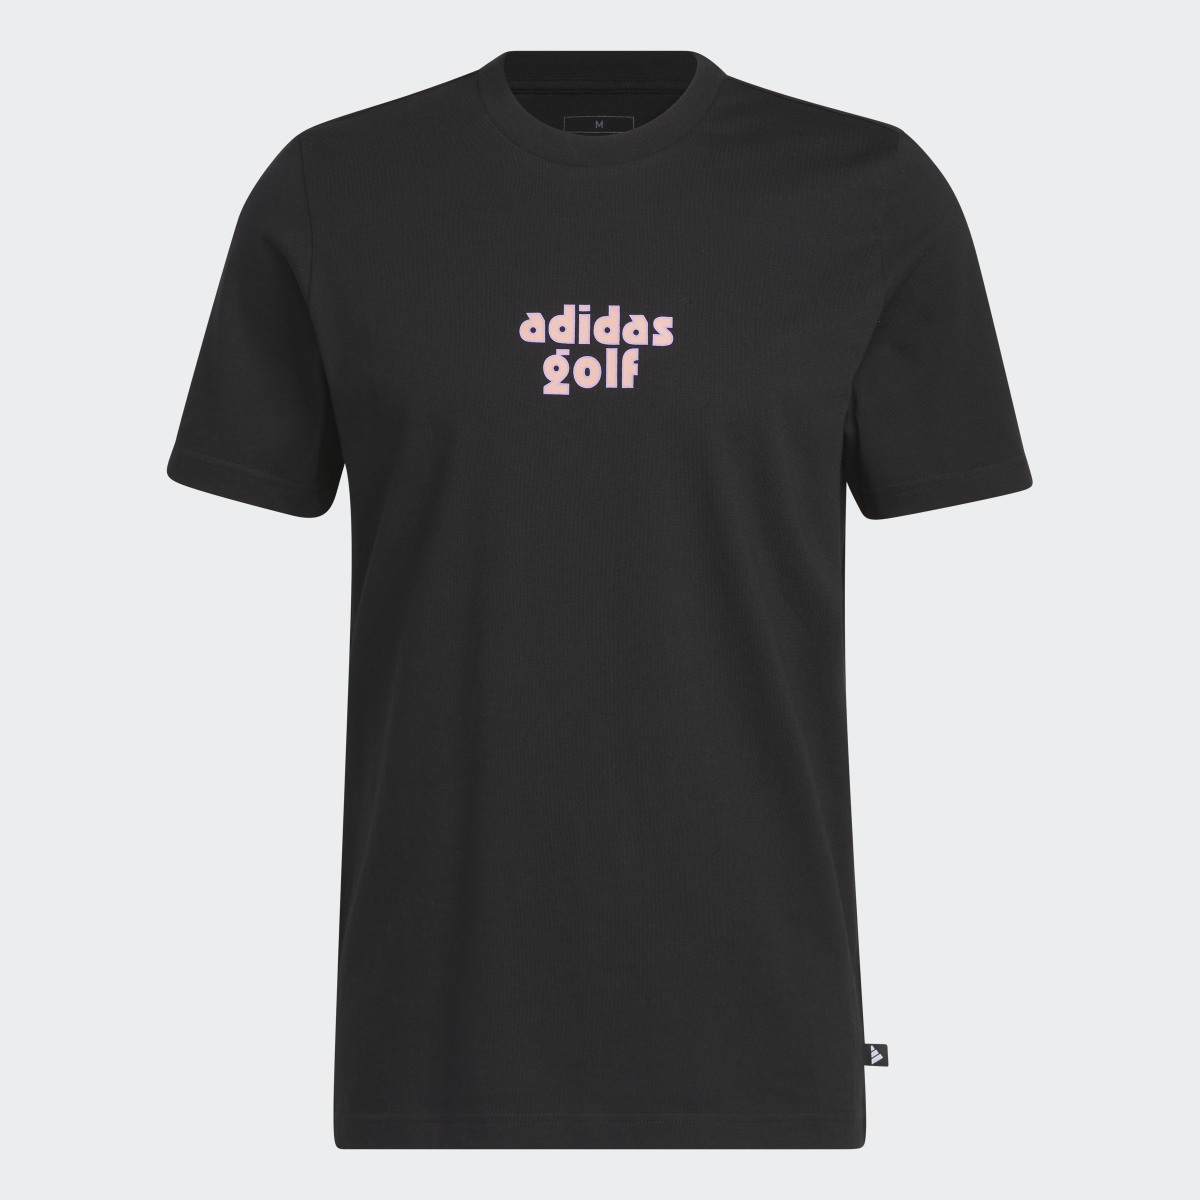 Adidas Golf Graphic Tee. 5